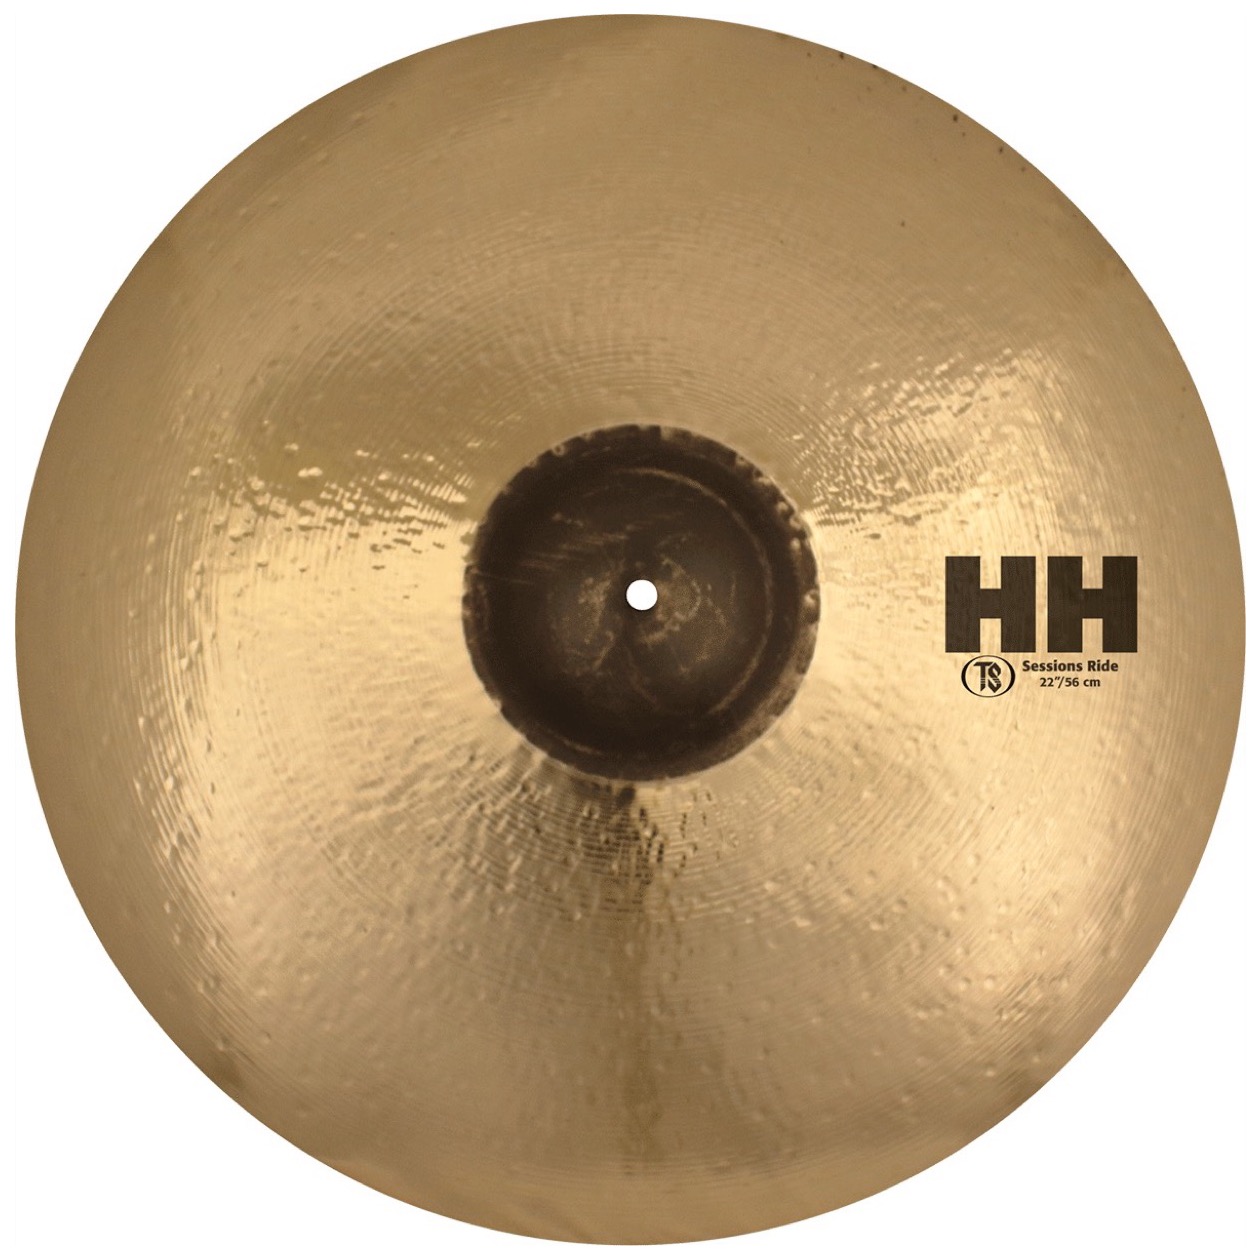 Sabian 12212 TS / 12212TS Cymbal 22" HH Sessions Ride